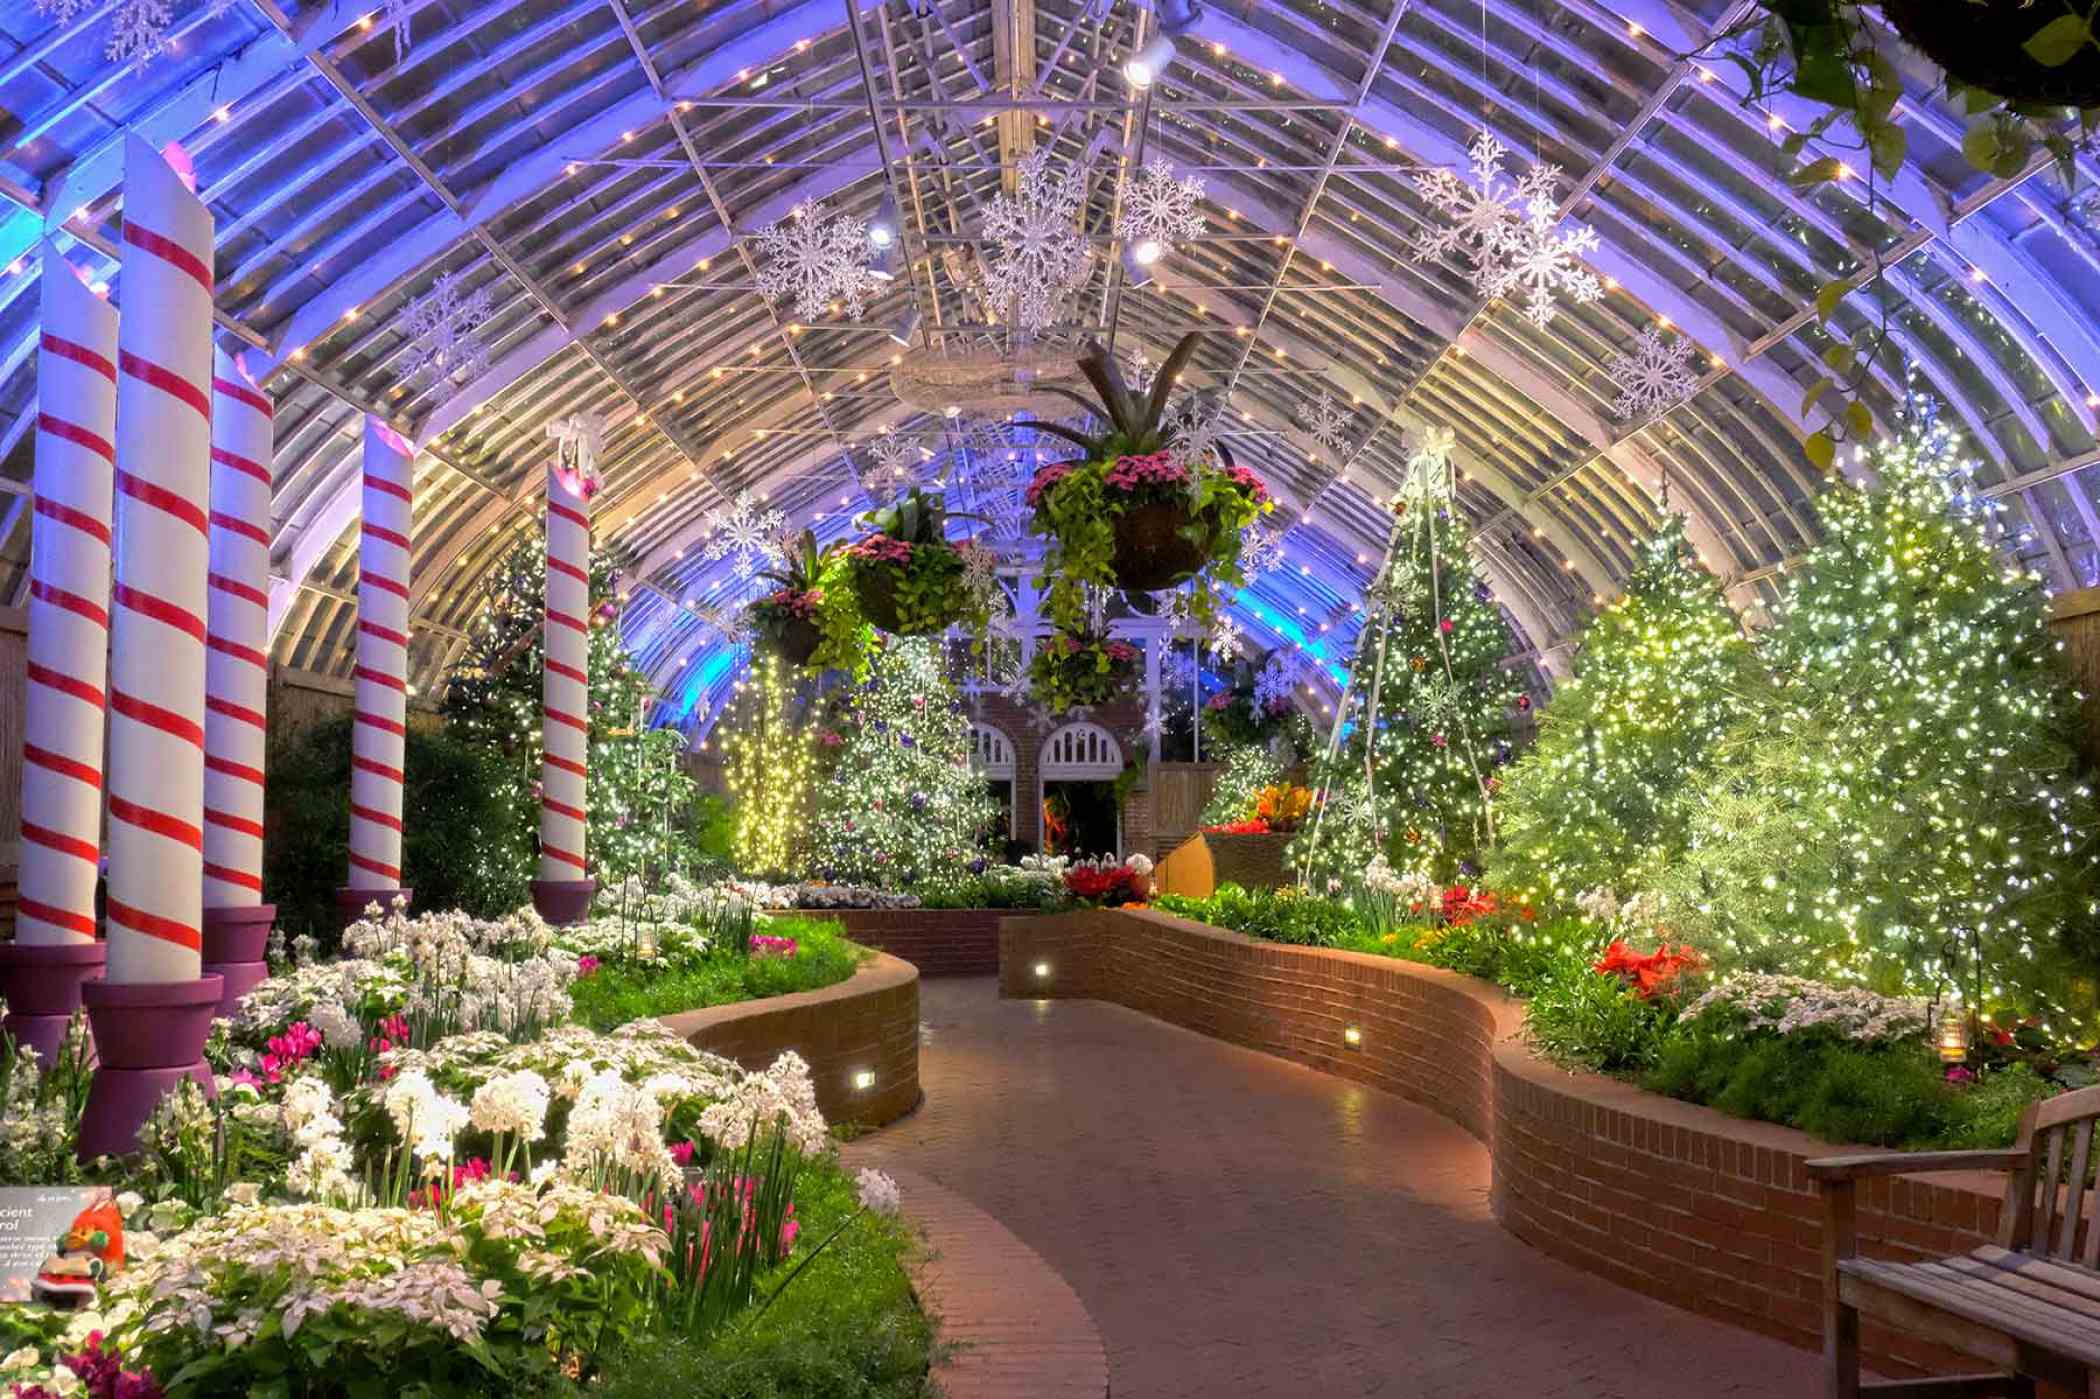 Winter Flower Show and Light Garden 2015: Deck the Halls | Phipps